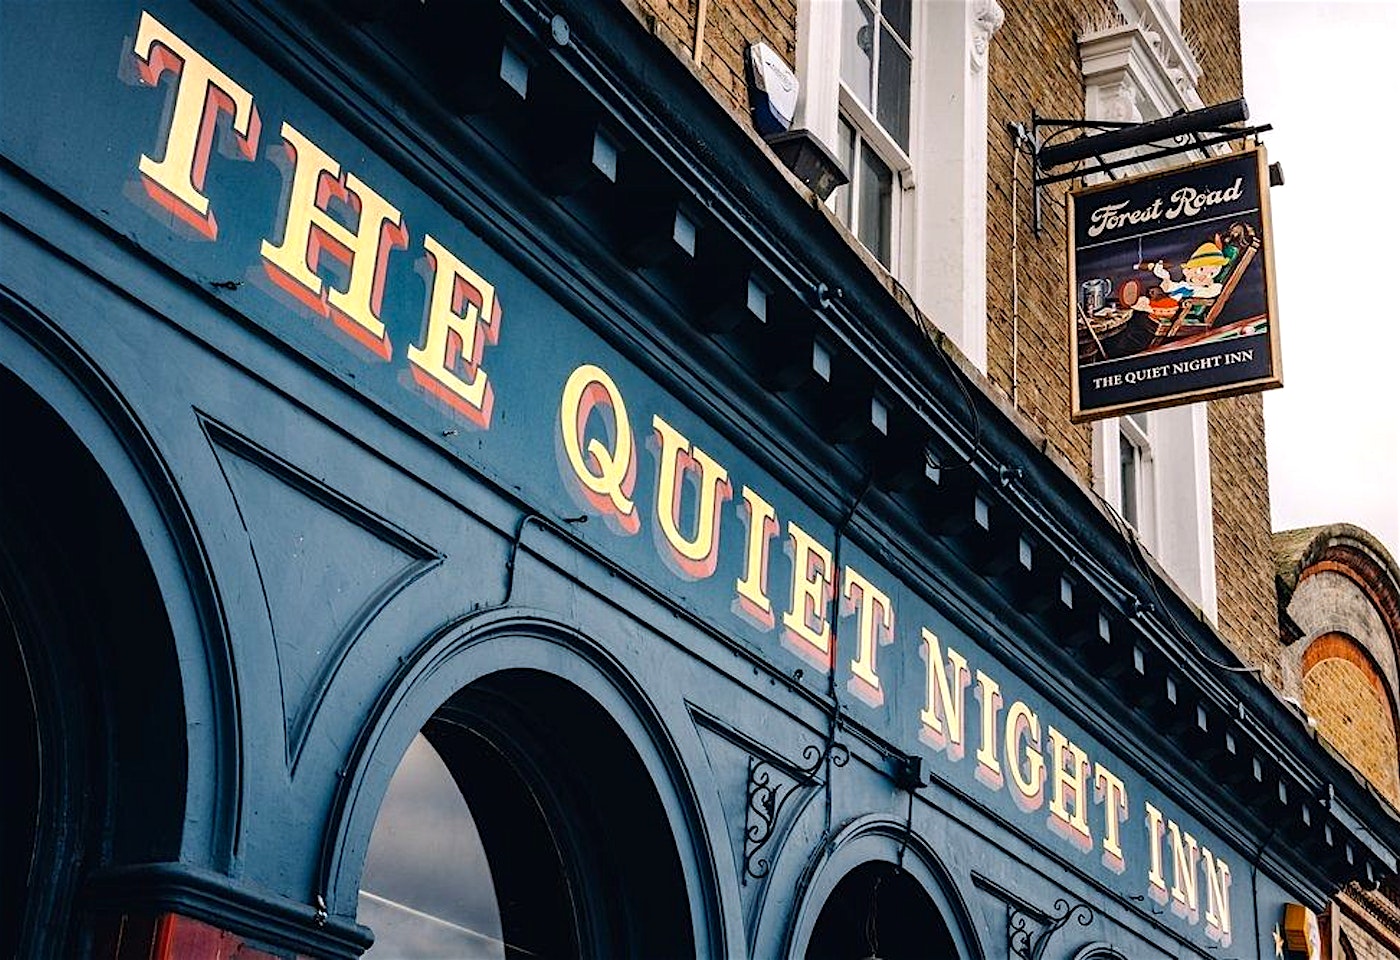 the quiet night inn notting hill bar london